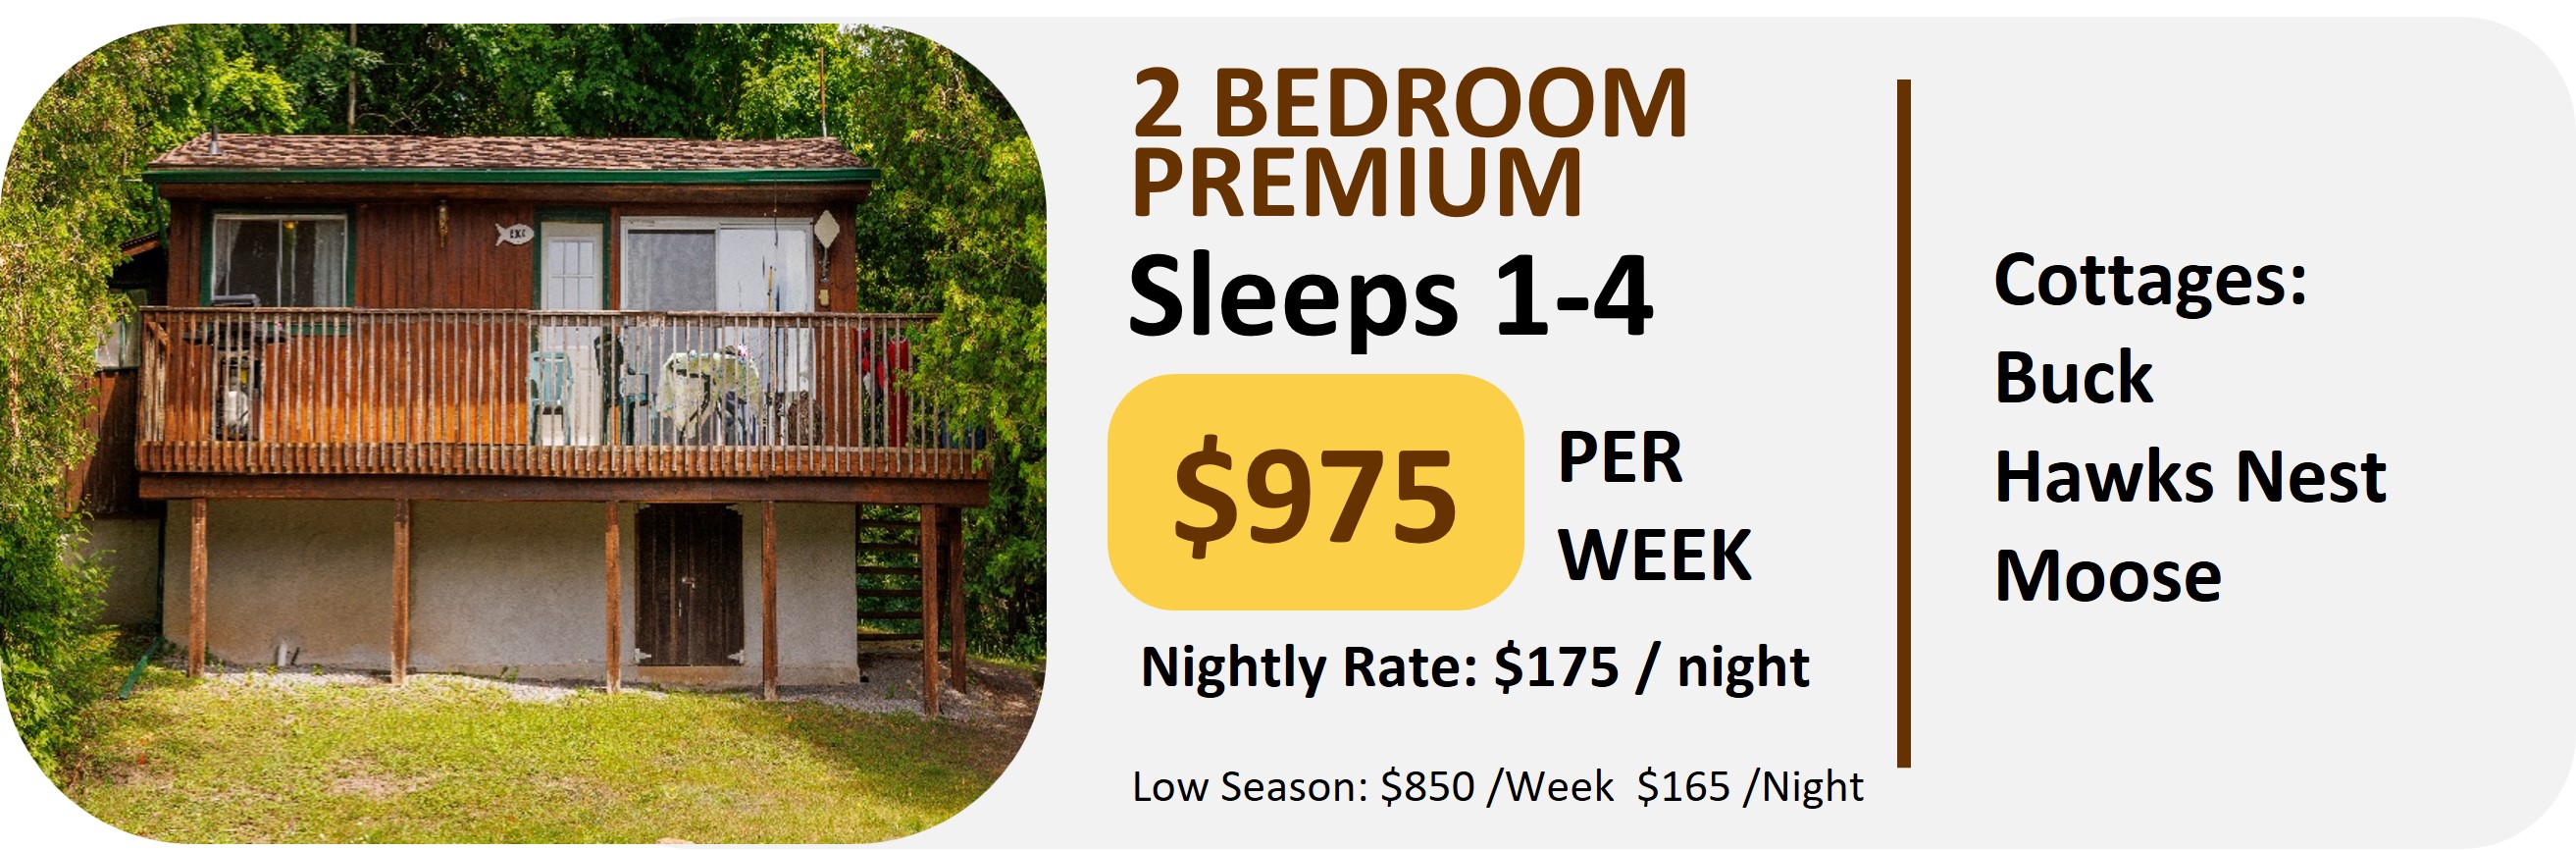 2 Bedroom Premium